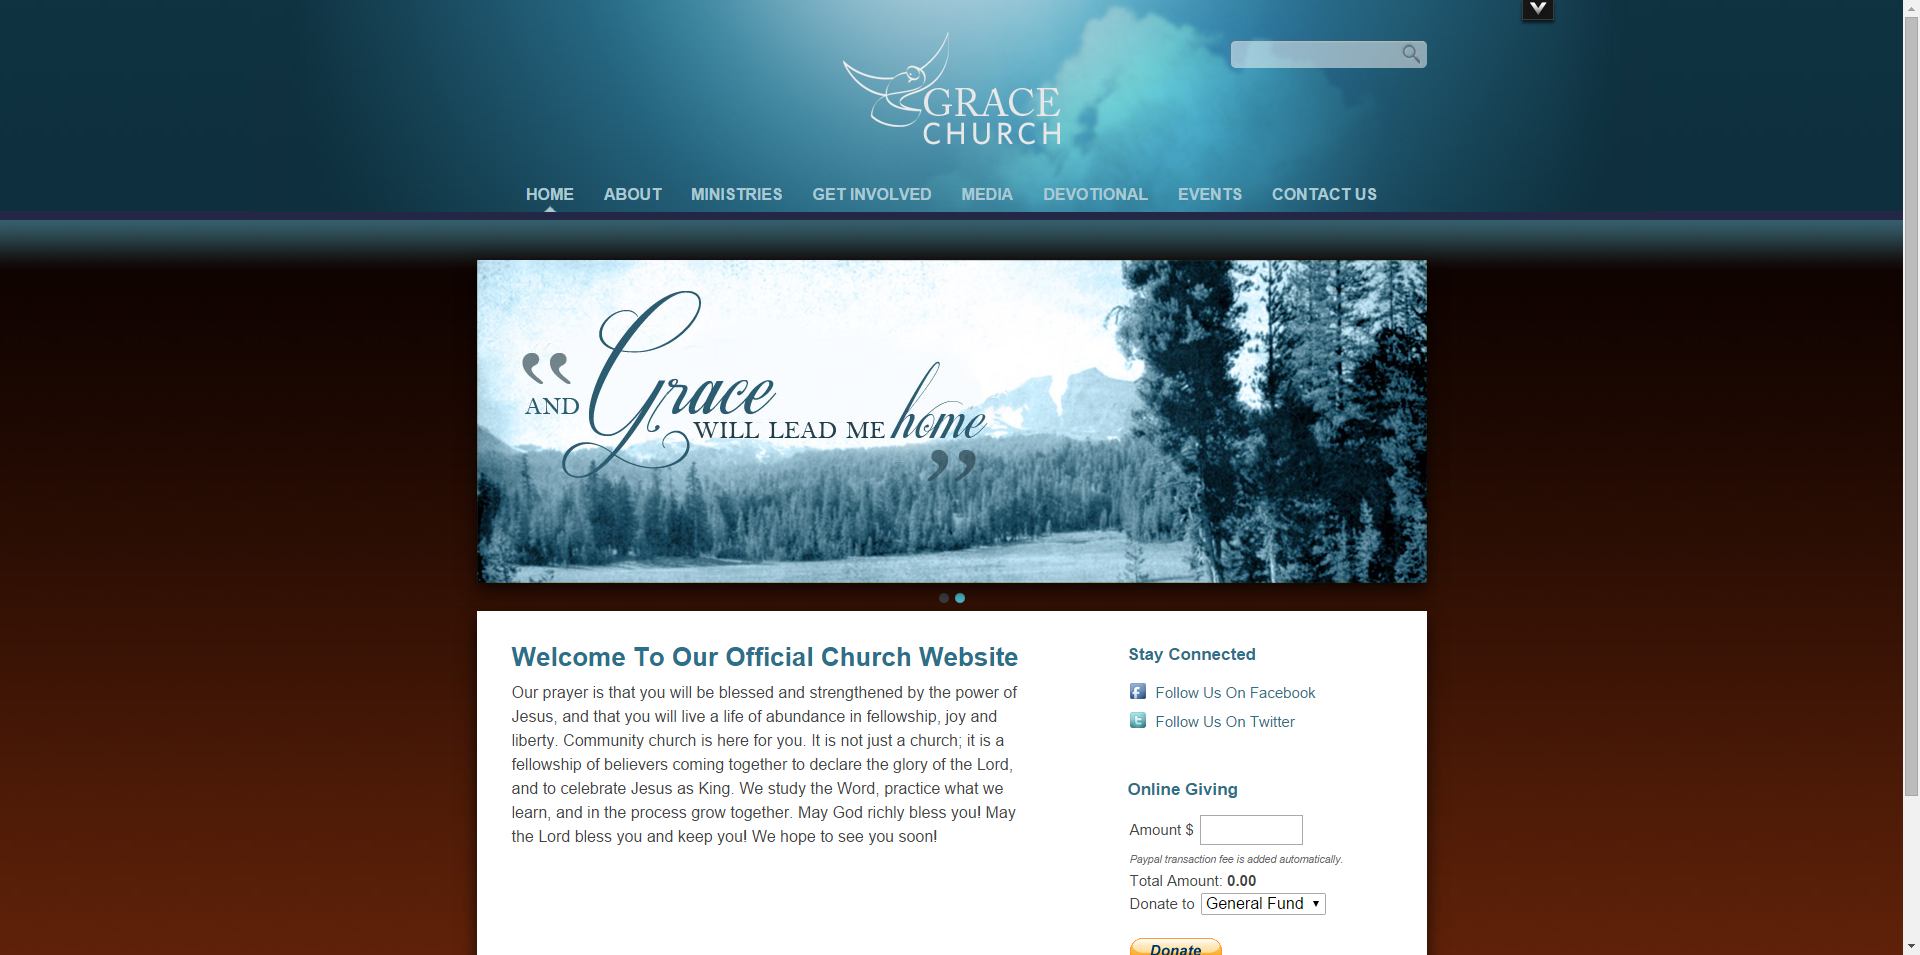 Blue and Burgundy Church Website Template